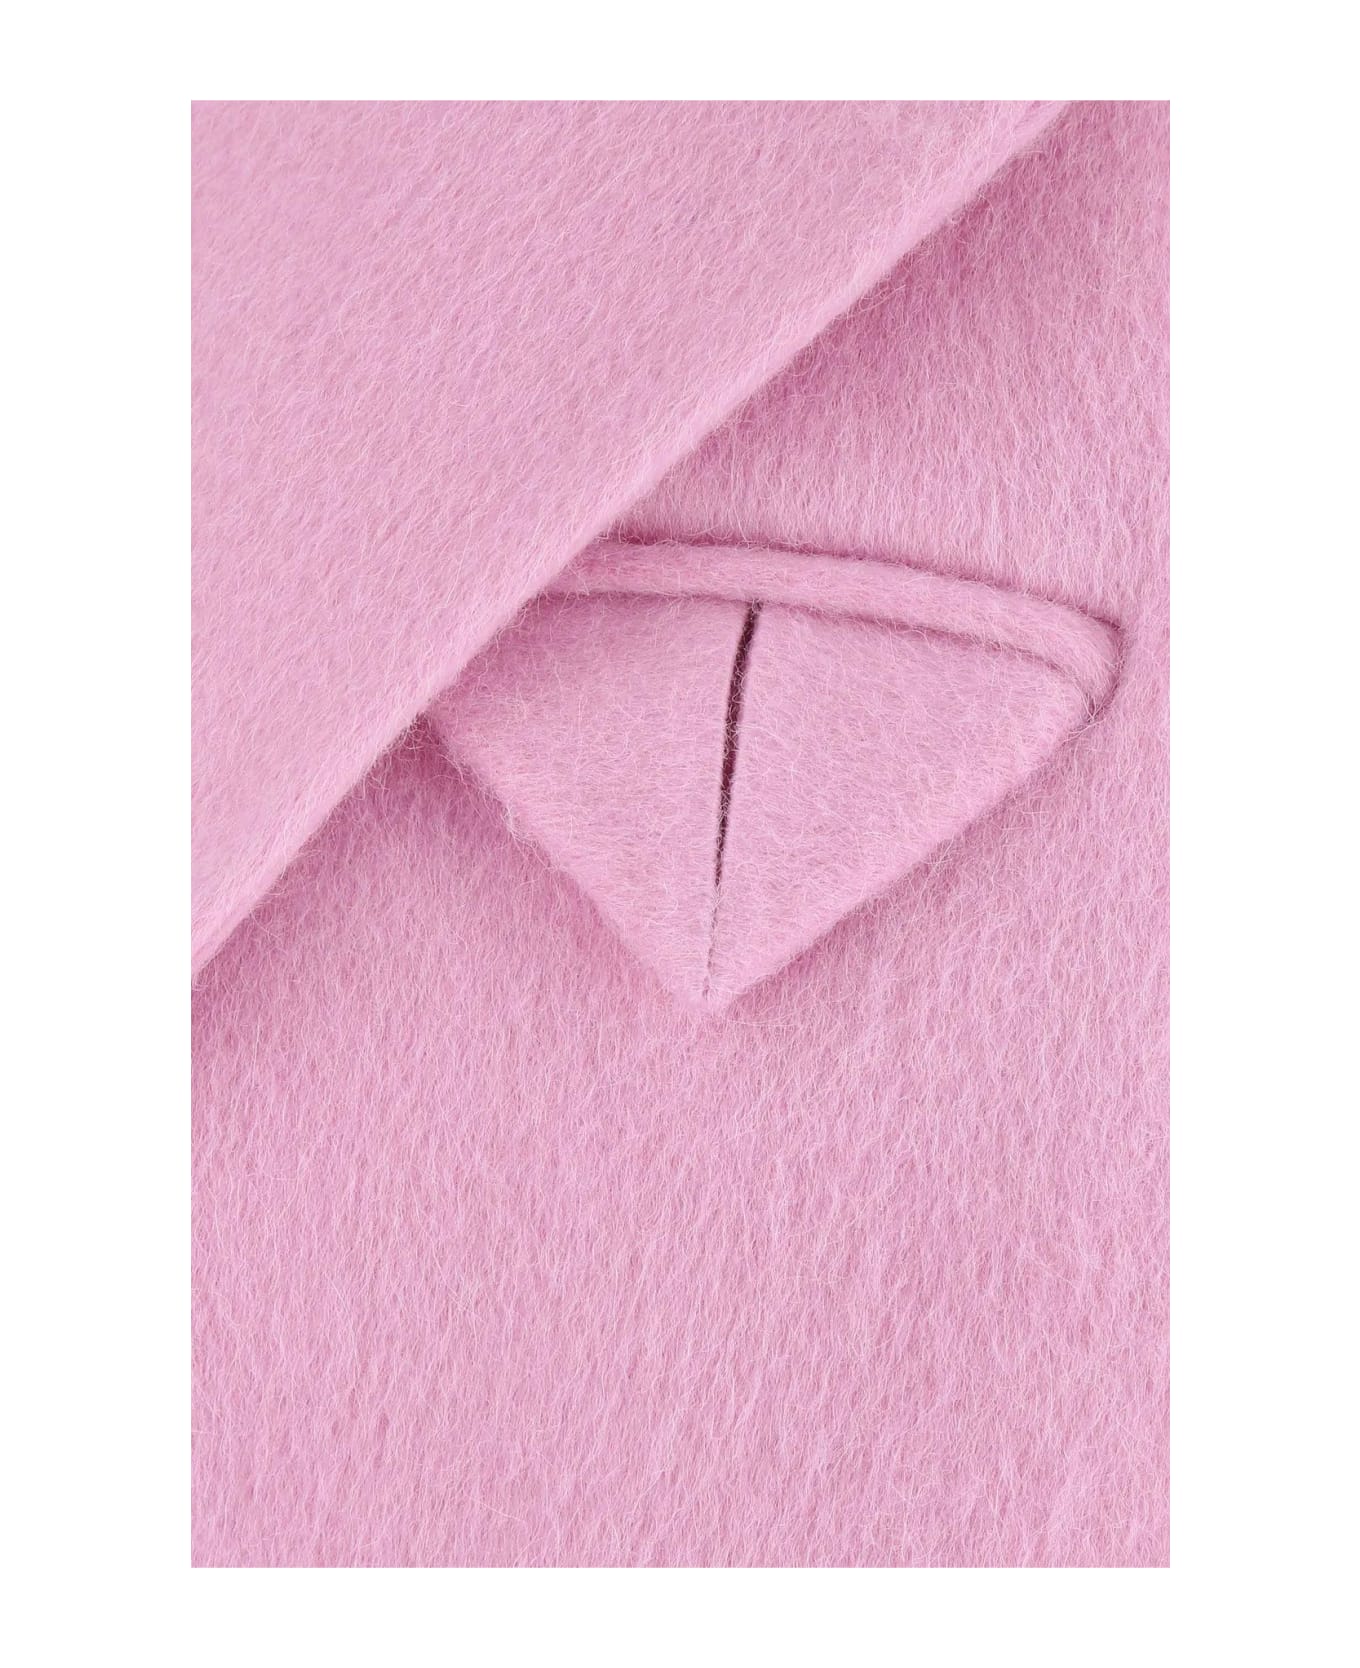 Bottega Veneta Pink Wool Blend Coat - BALLOON コート